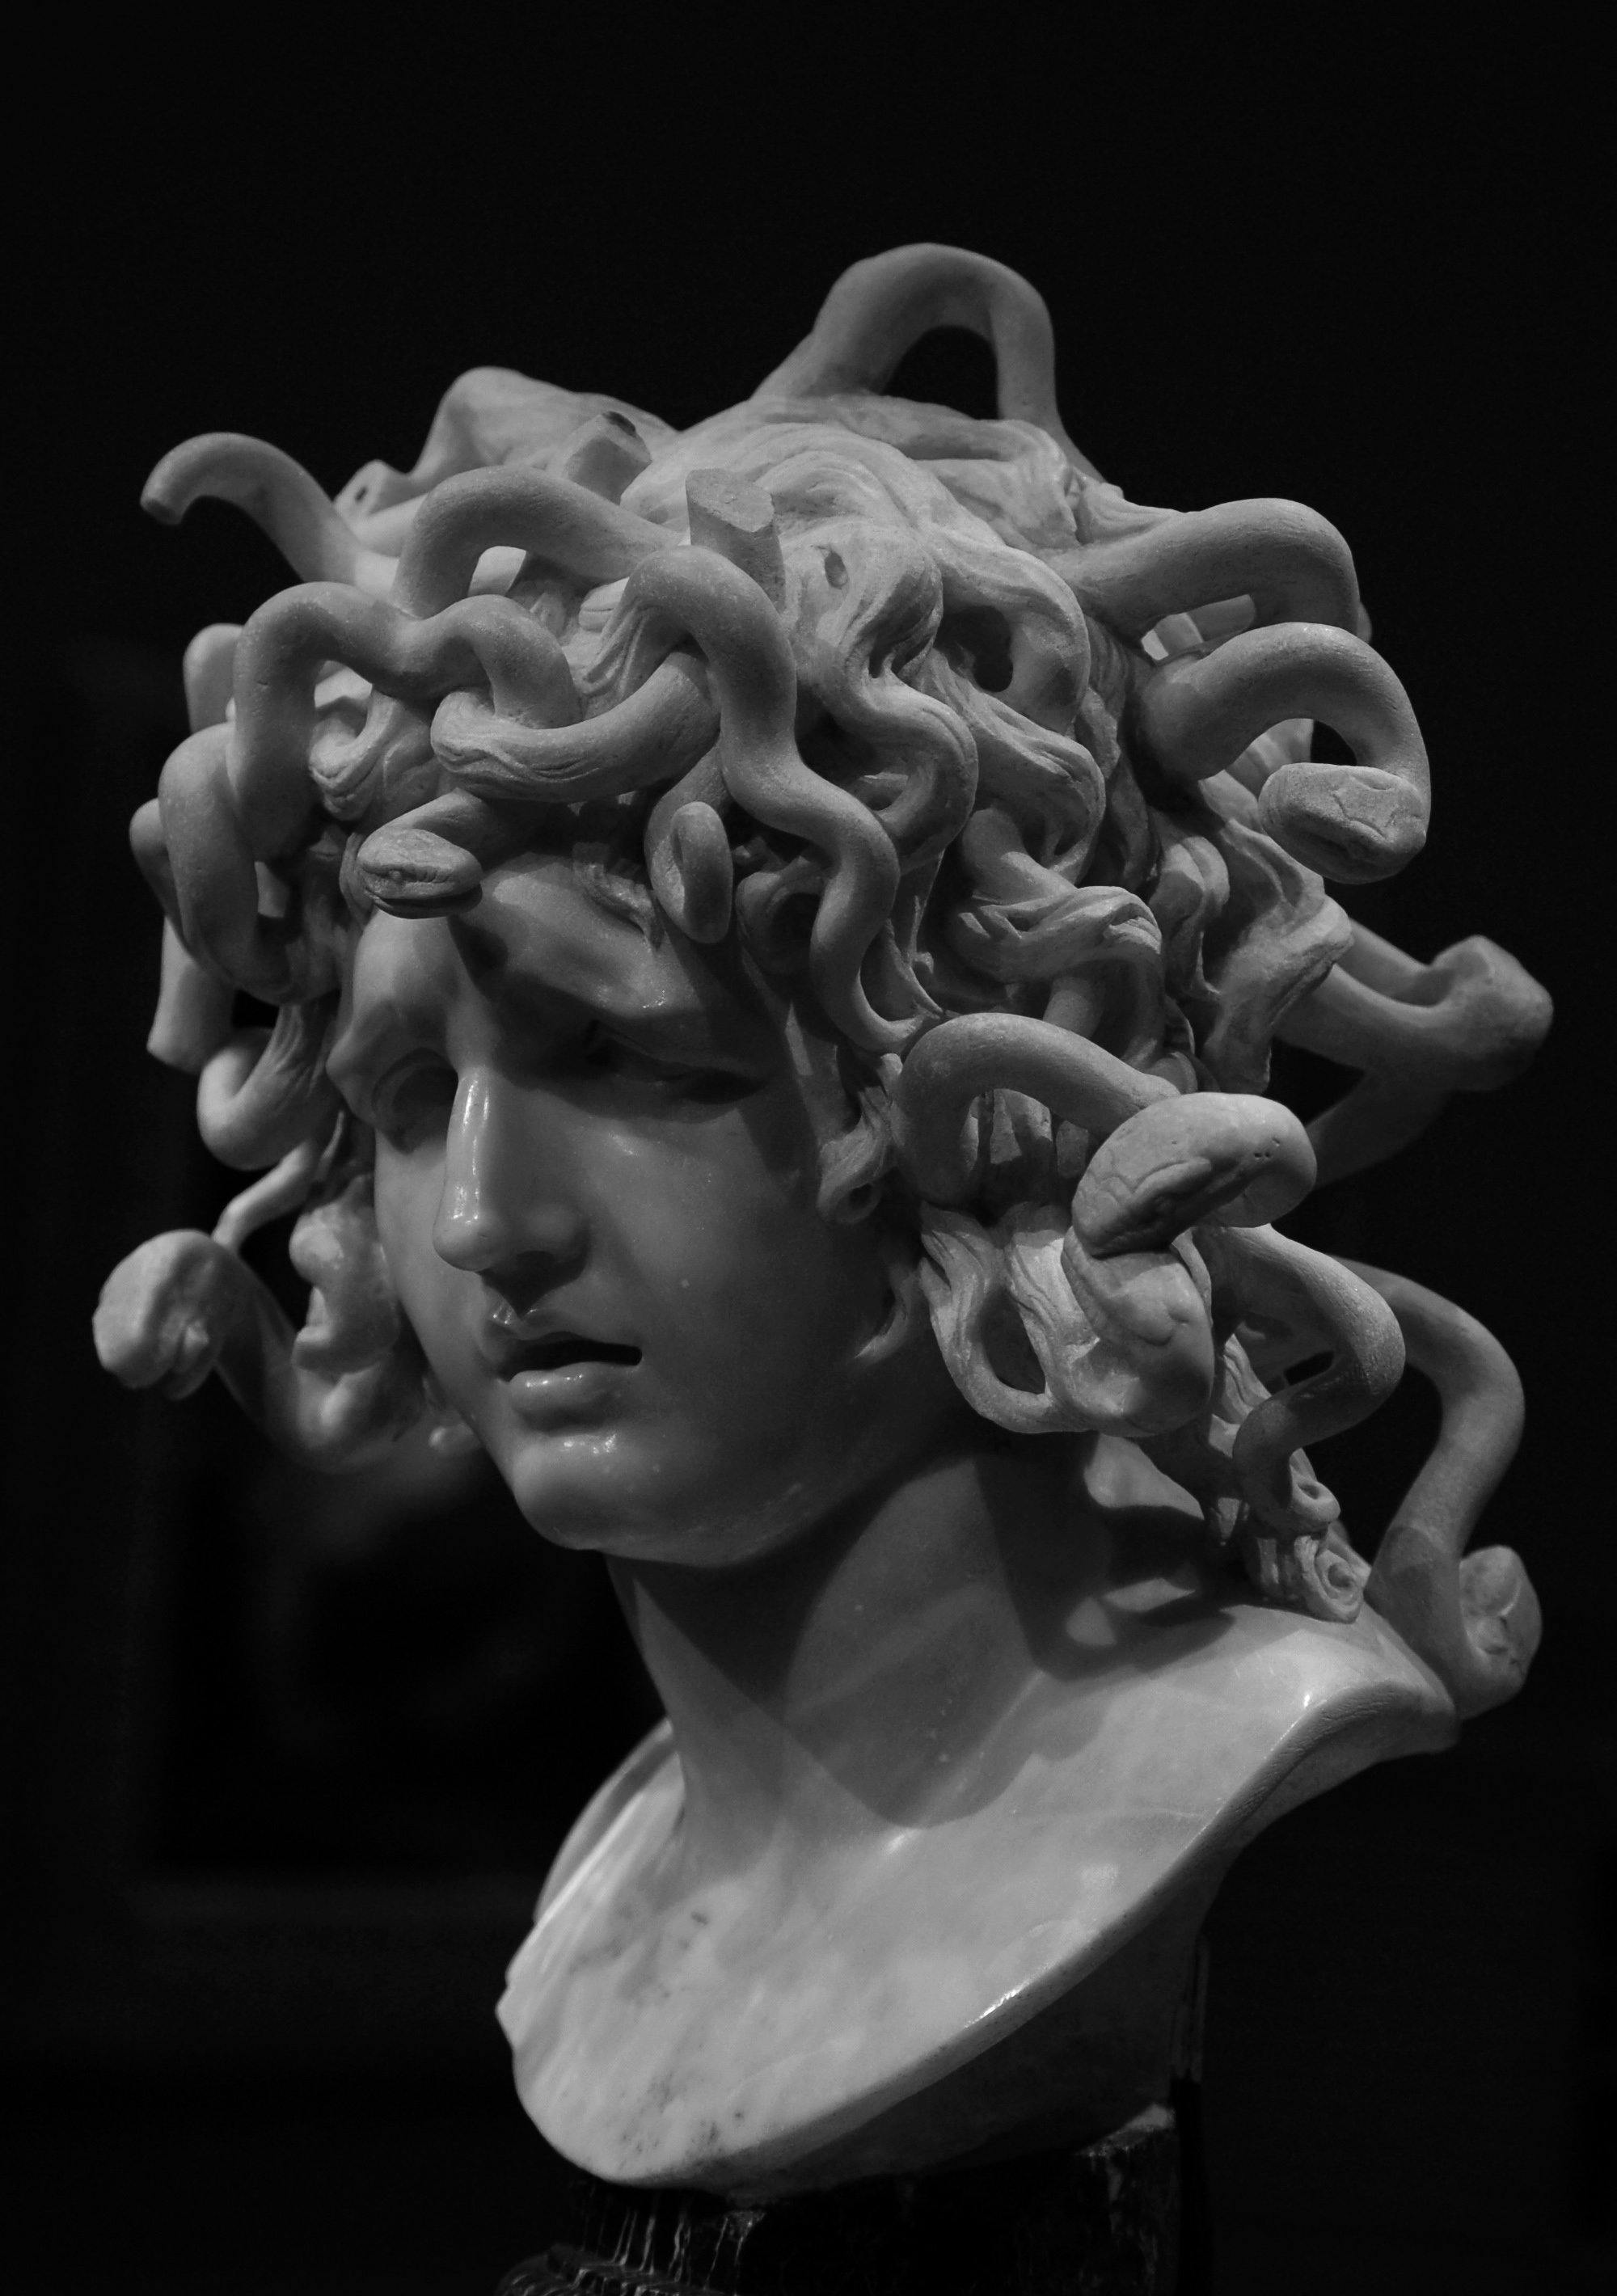 Gian Lorenzo Bernini's "Medusa" circa 1640